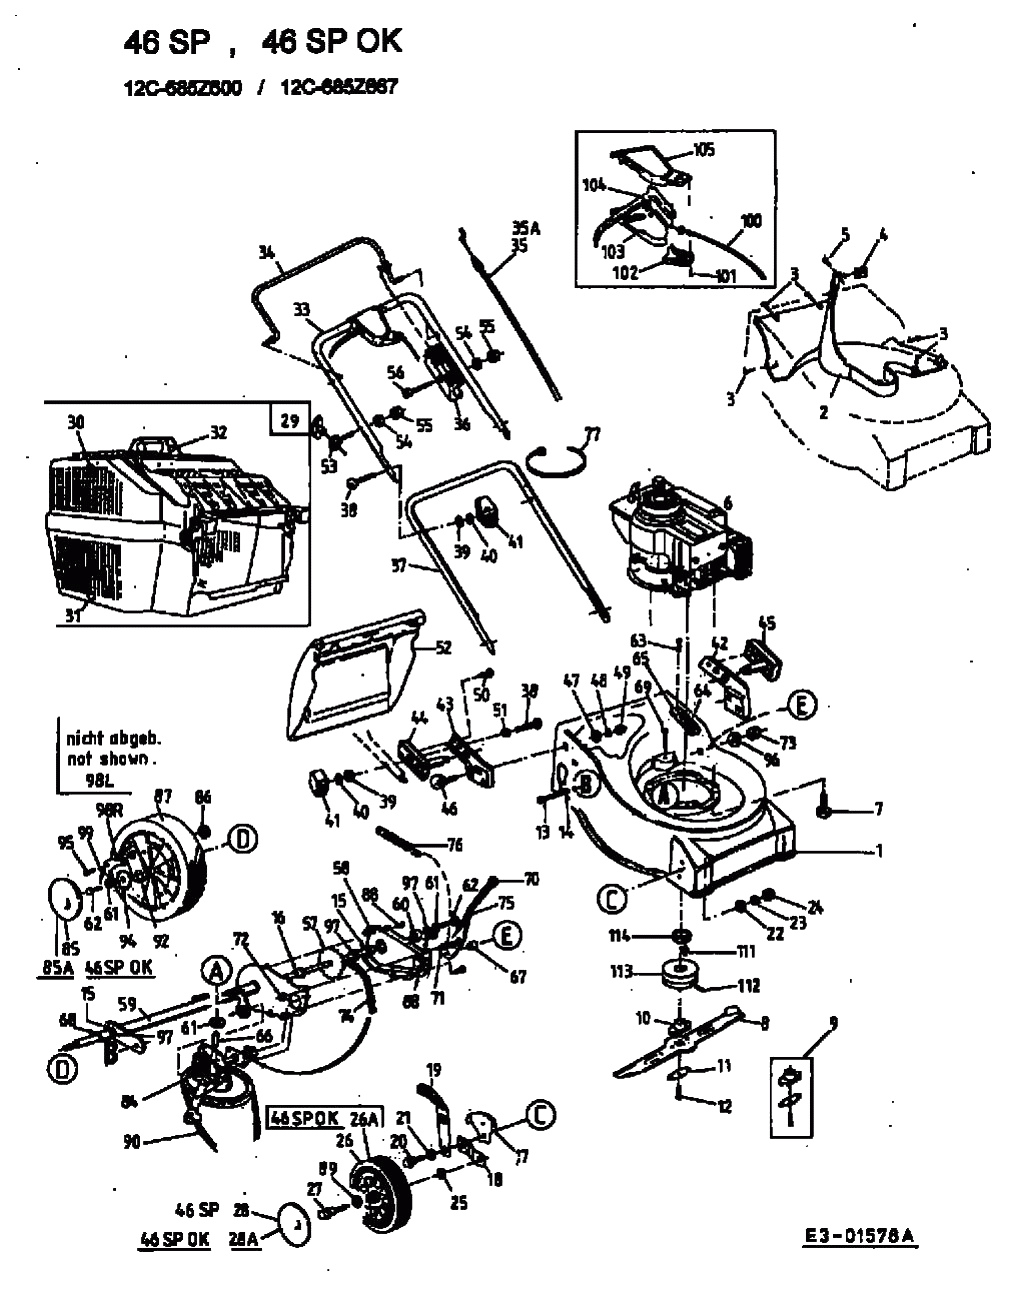 MTD Артикул 12C-685Z600 (год выпуска 2001). Основная деталировка